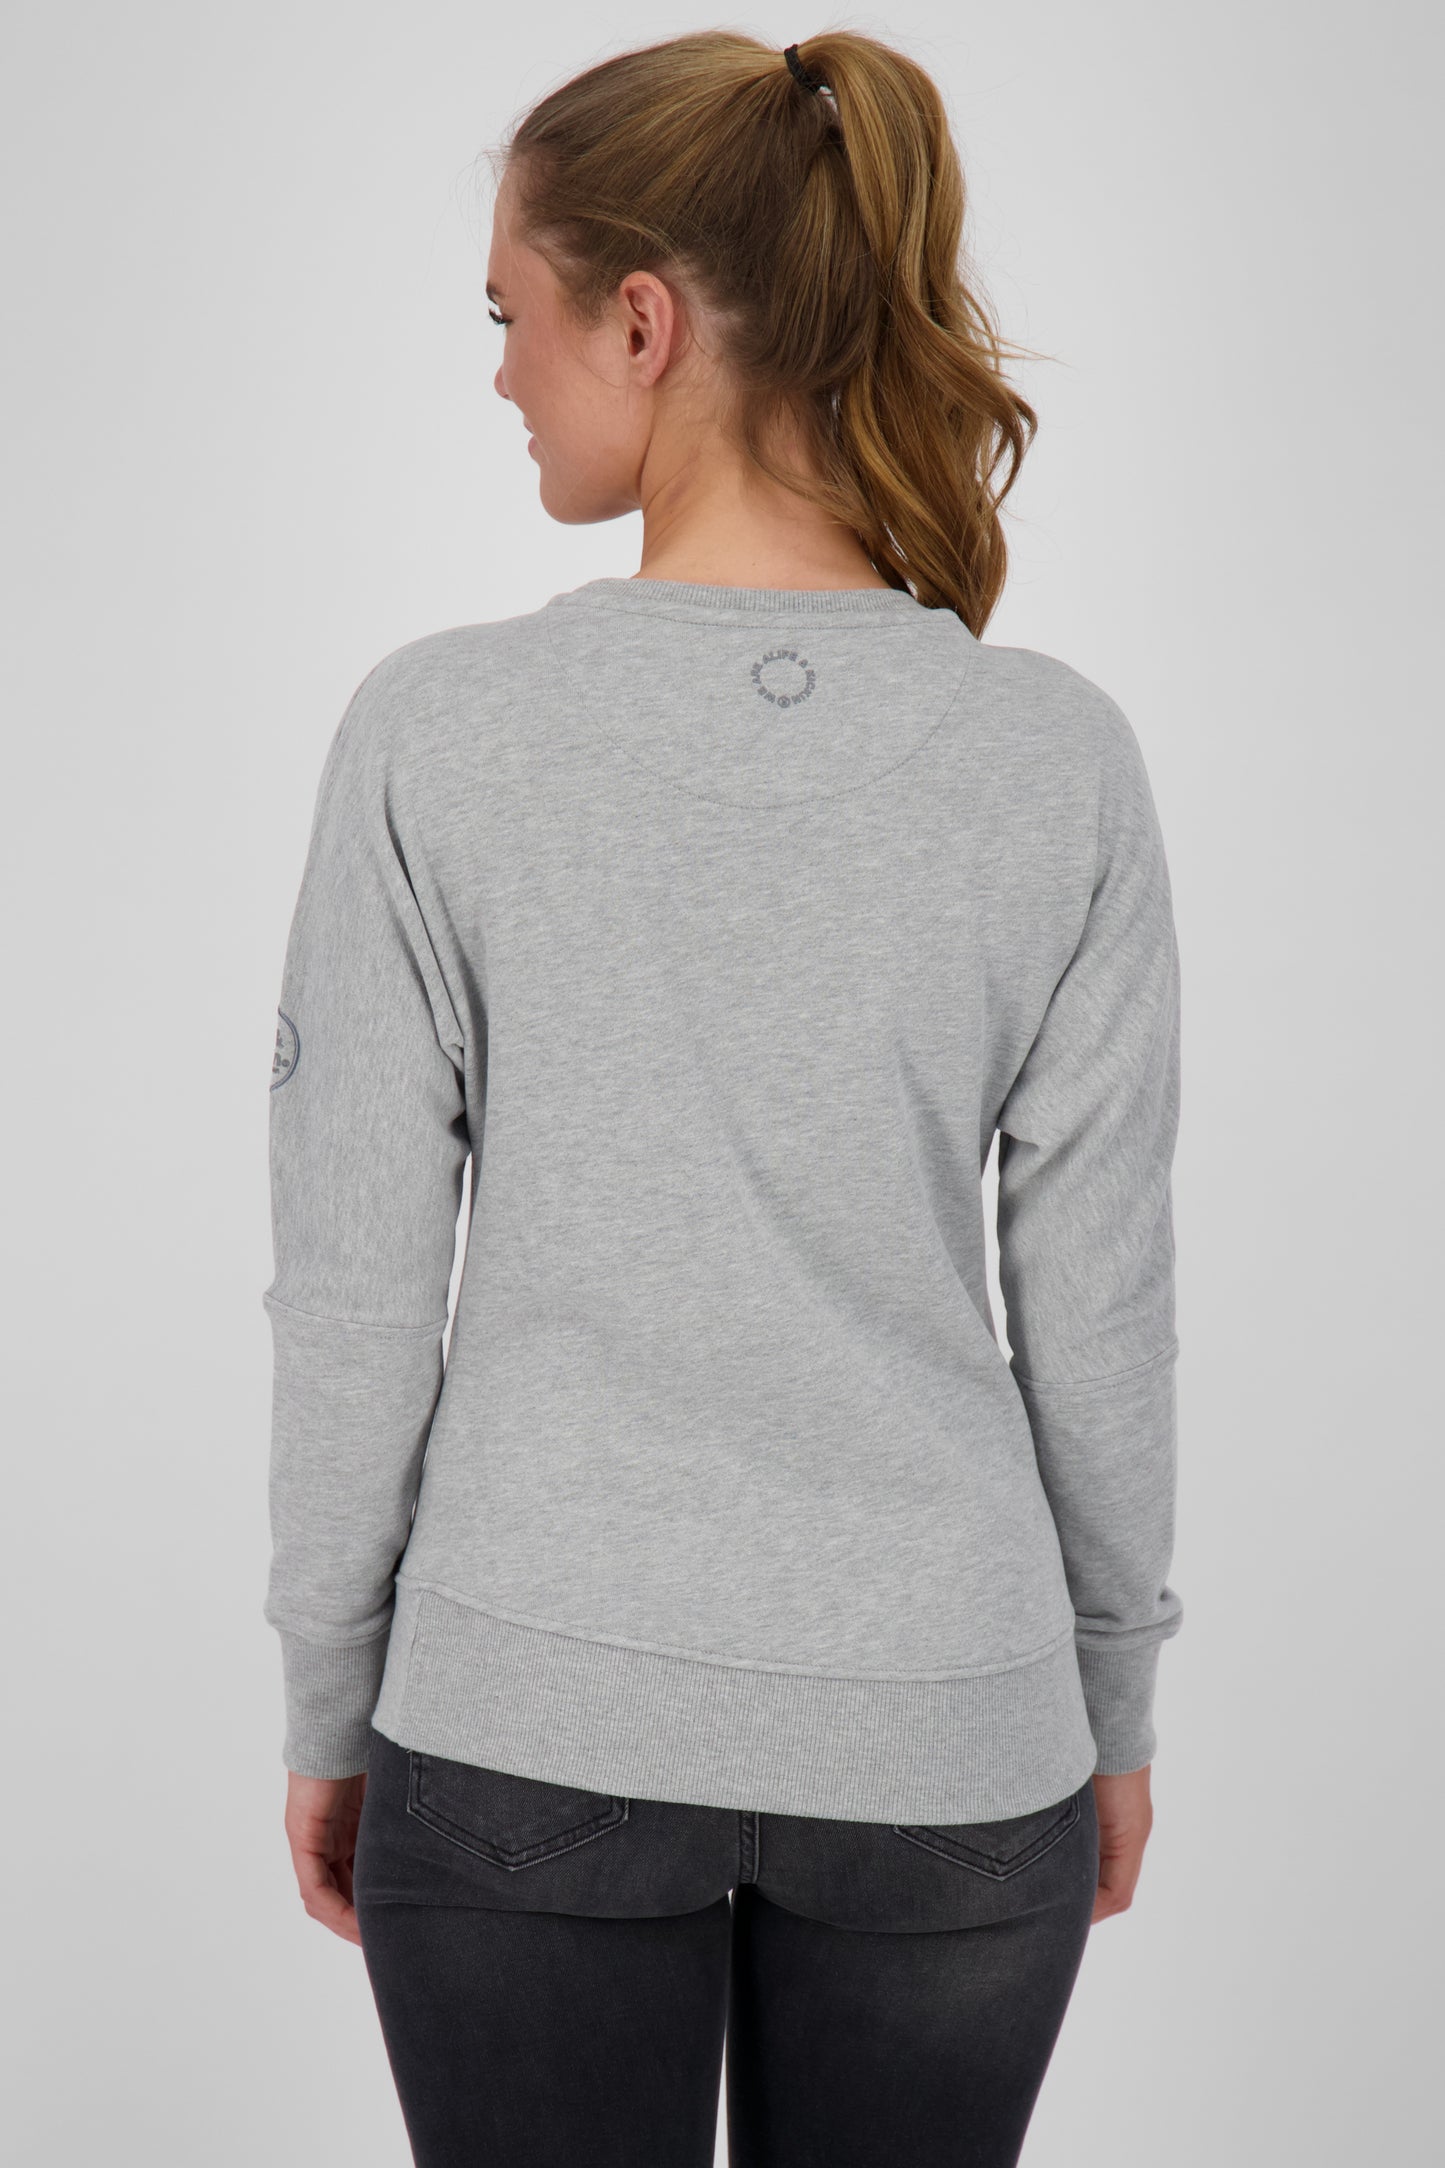 DalaAK A Damen Sweater-Lässig, farbenfroh, perfekt für den Alltag Grau